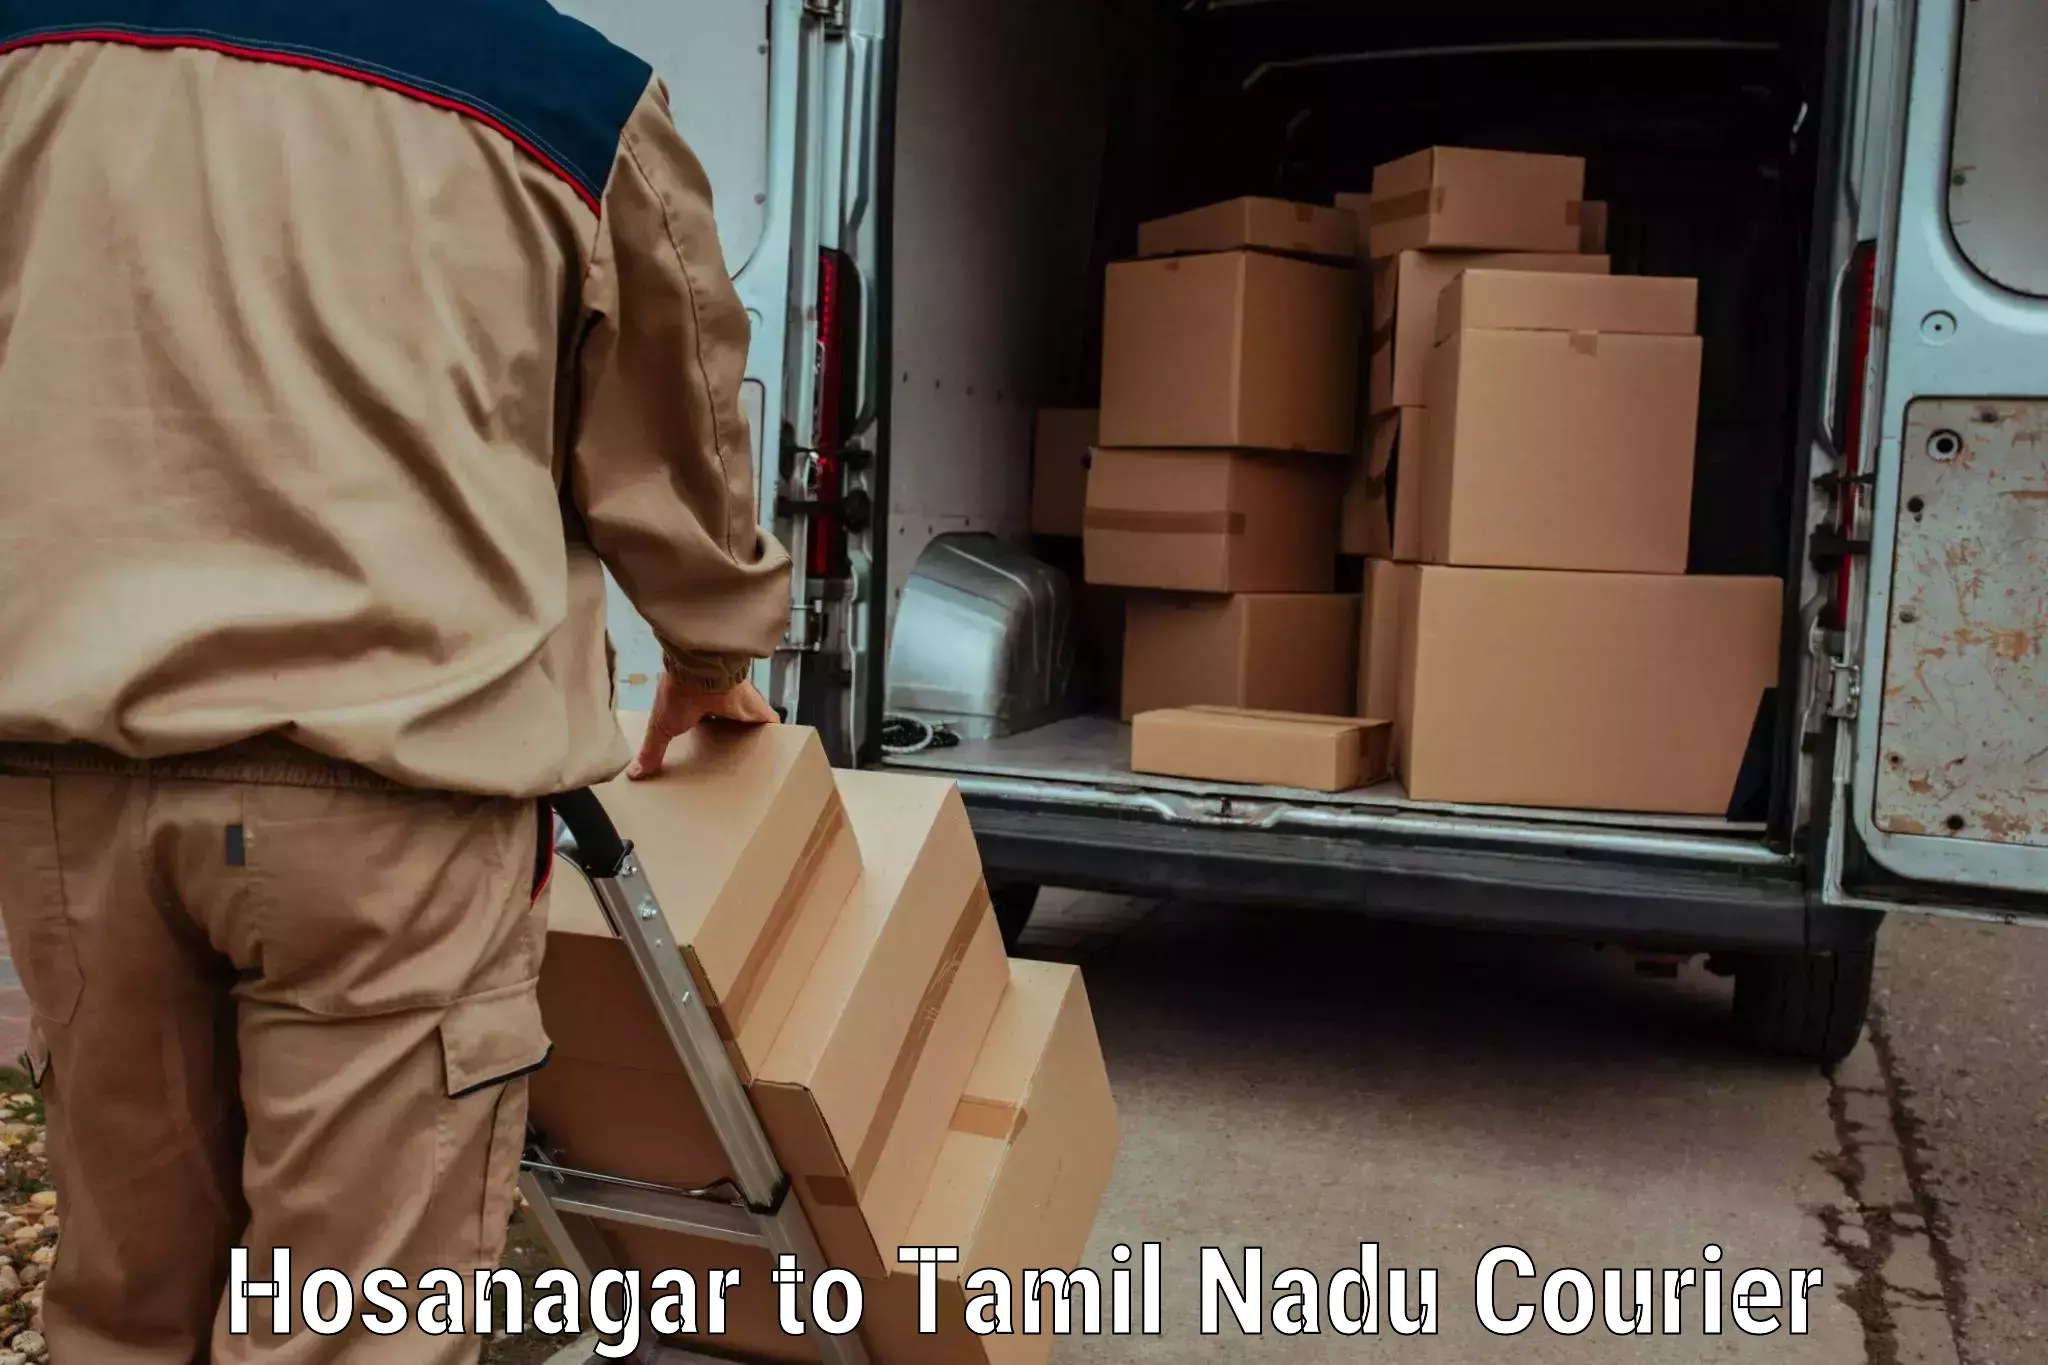 24/7 courier service Hosanagar to Periyakulam